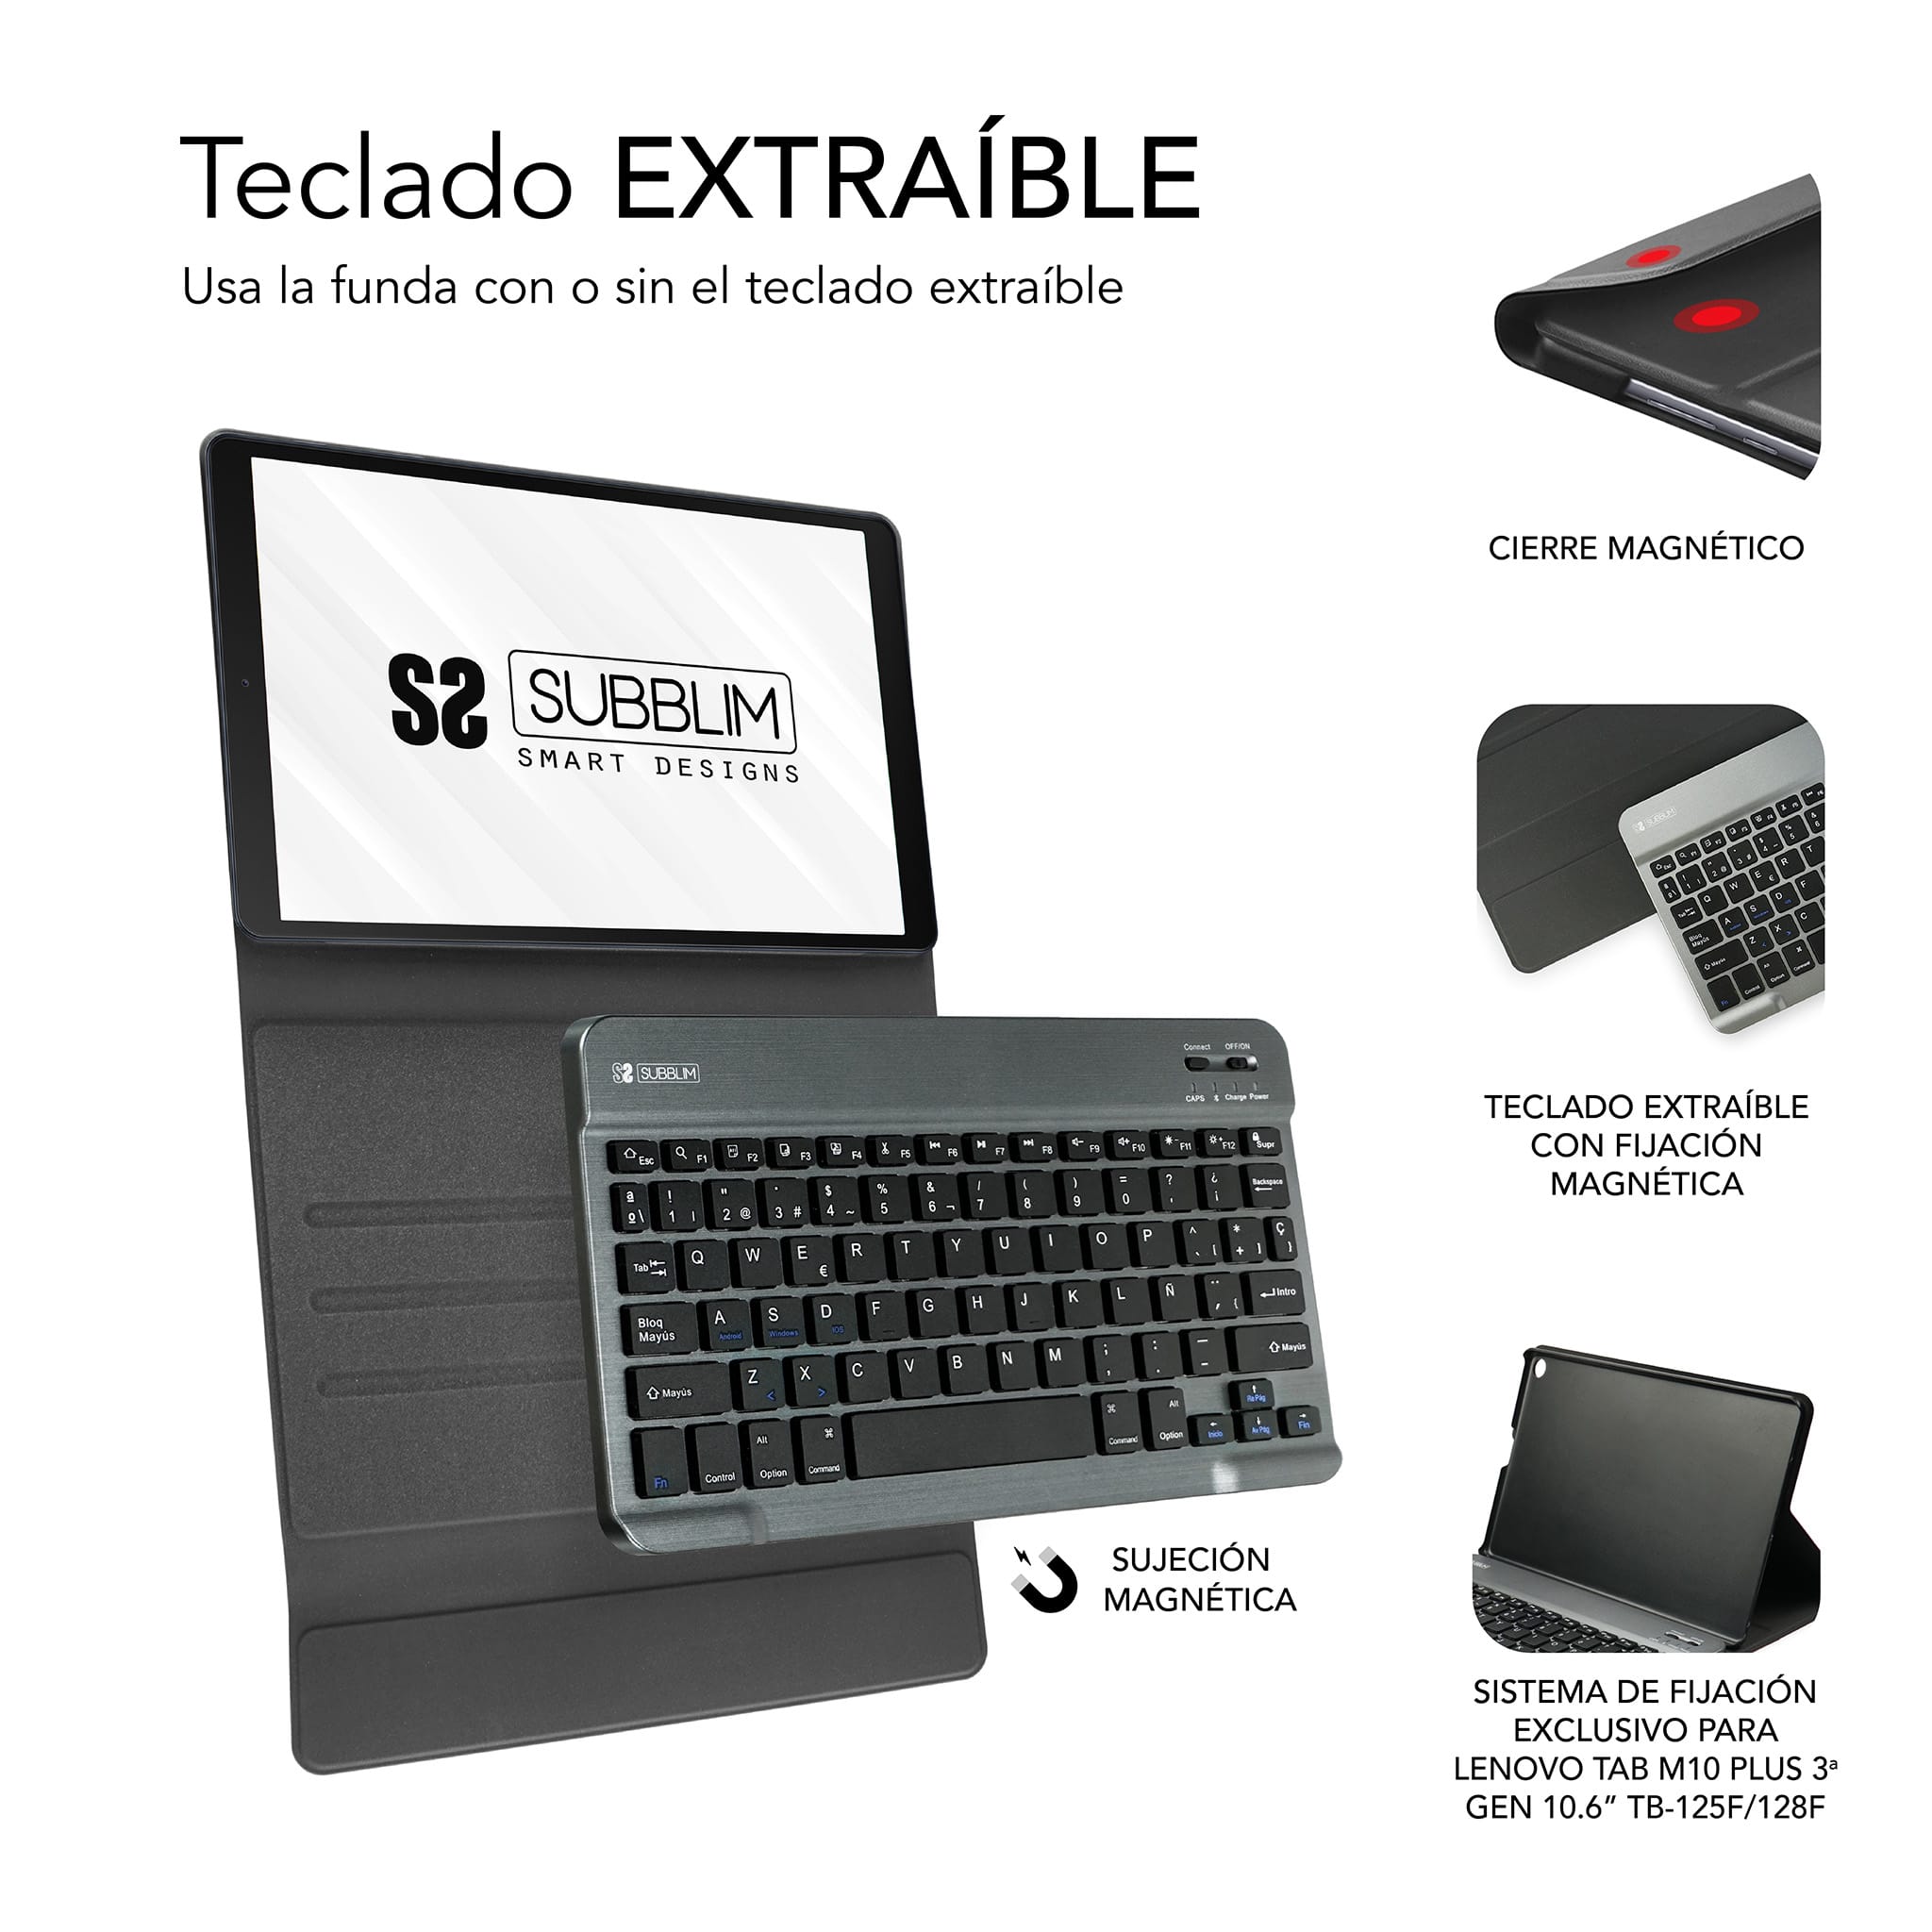 Funda Tablet Lenovo M10 Plus Negra, 10.6